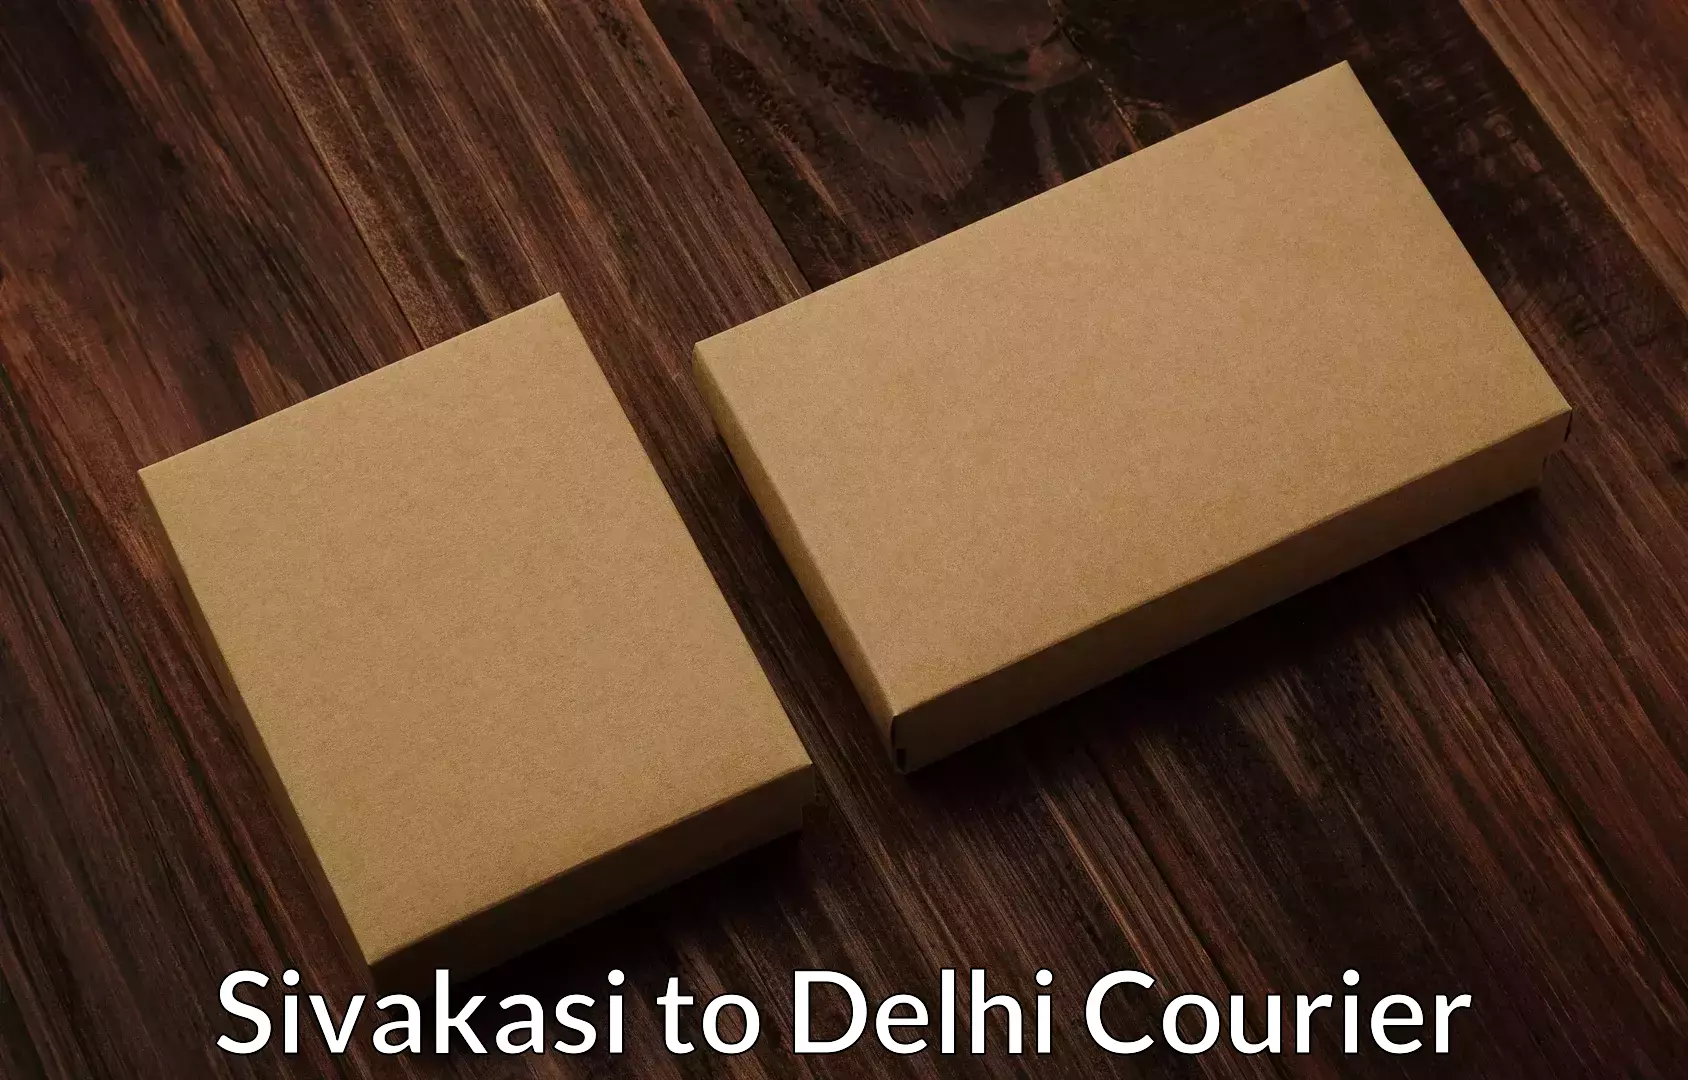 Professional moving company Sivakasi to Delhi